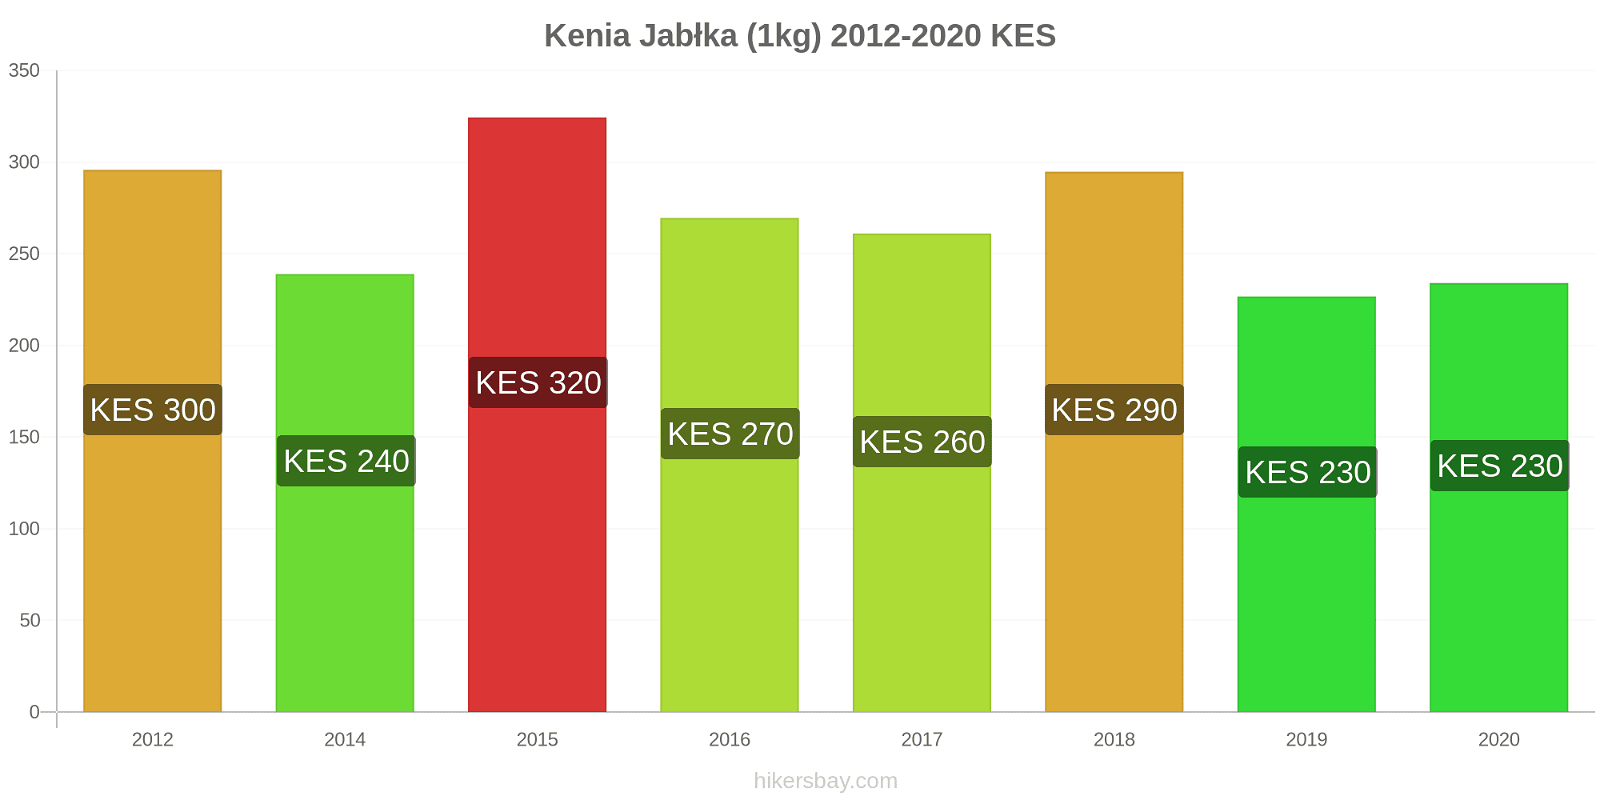 Kenia zmiany cen Jabłka (1kg) hikersbay.com